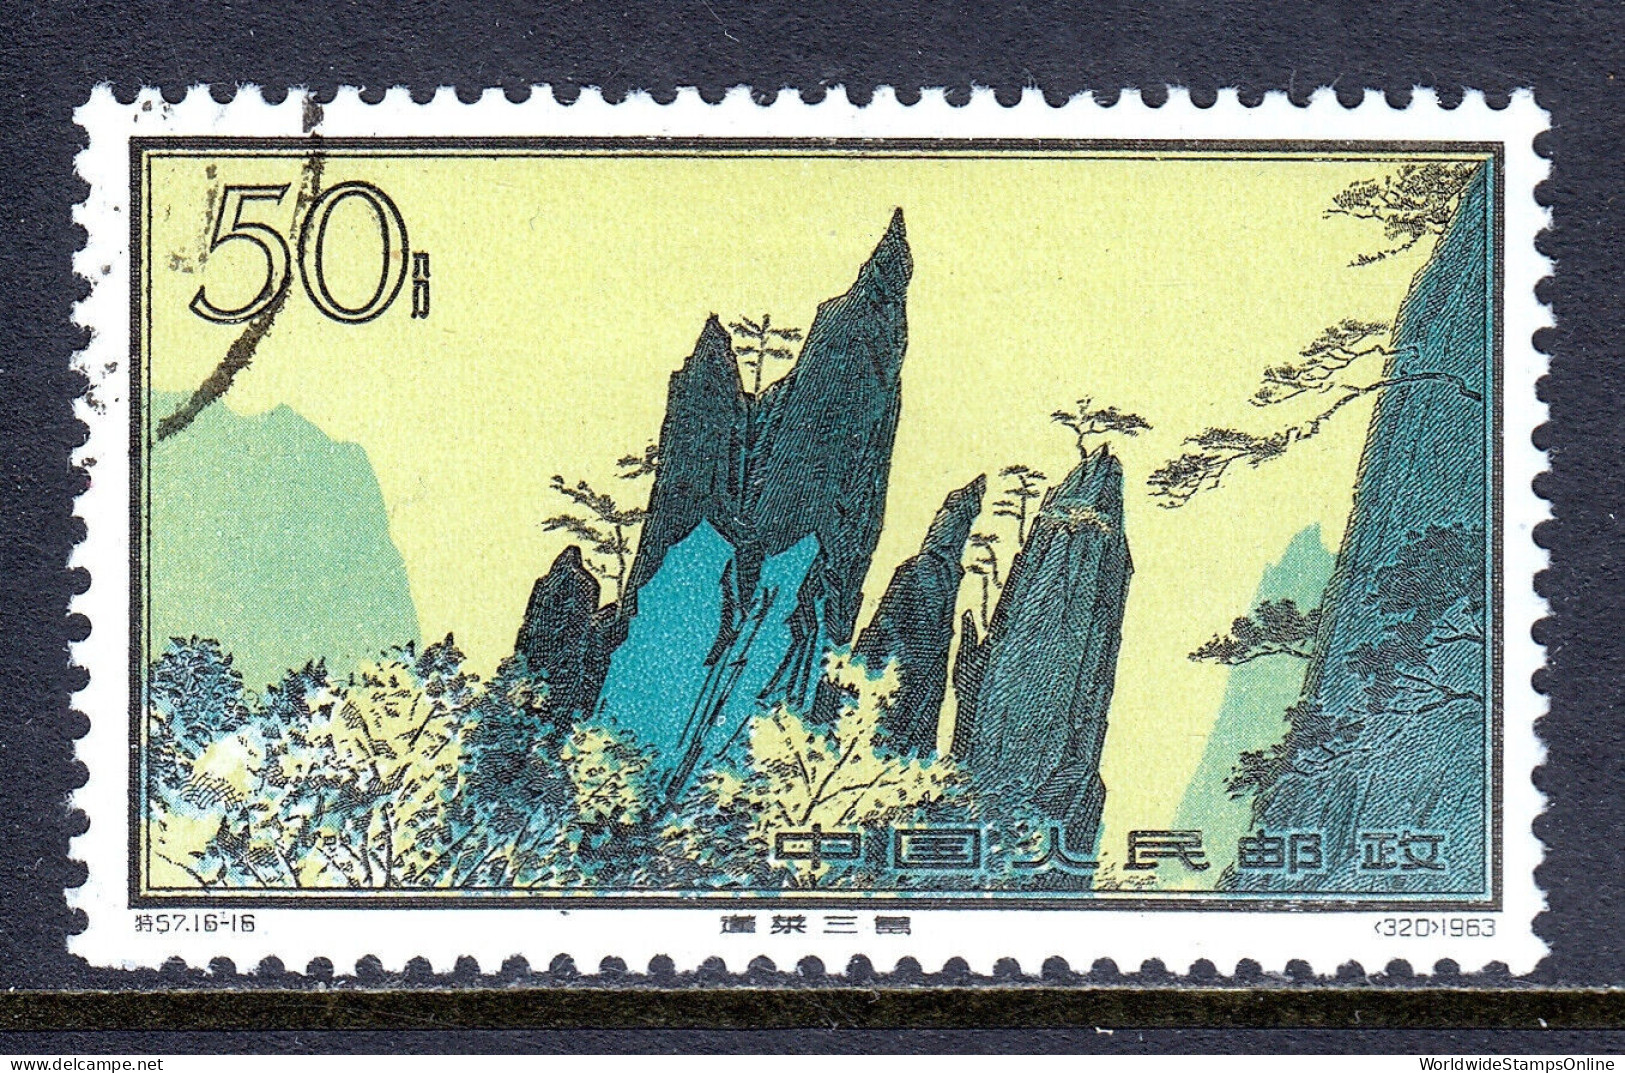 CHINA (P. R.) — SCOTT 731 — 1963 50f FAIRY TALES OF PEN LAI — USED/CTO — SCV $50 - Gebraucht